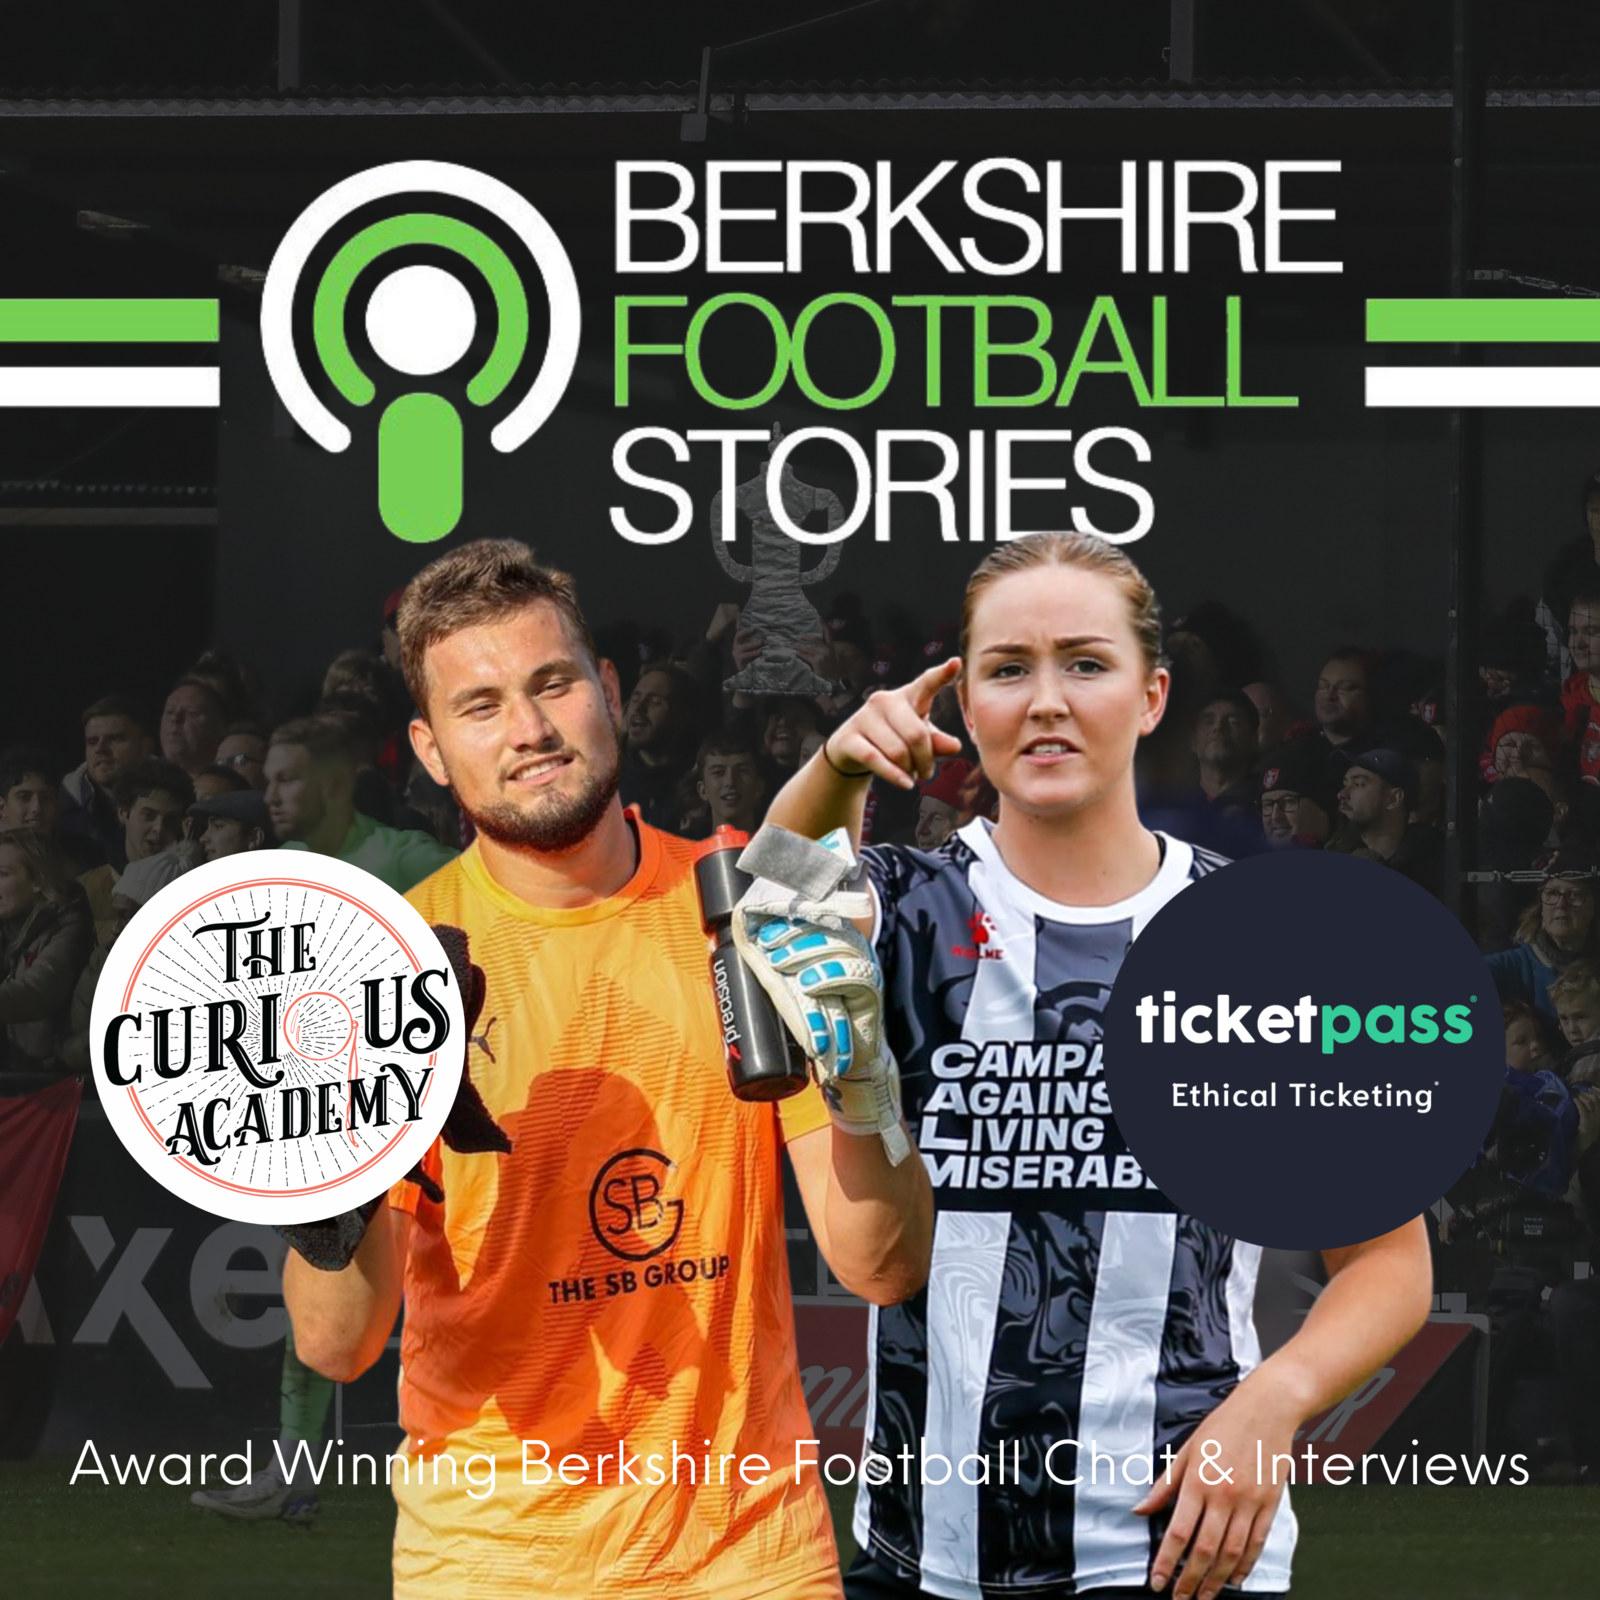 Berkshire Football Stories